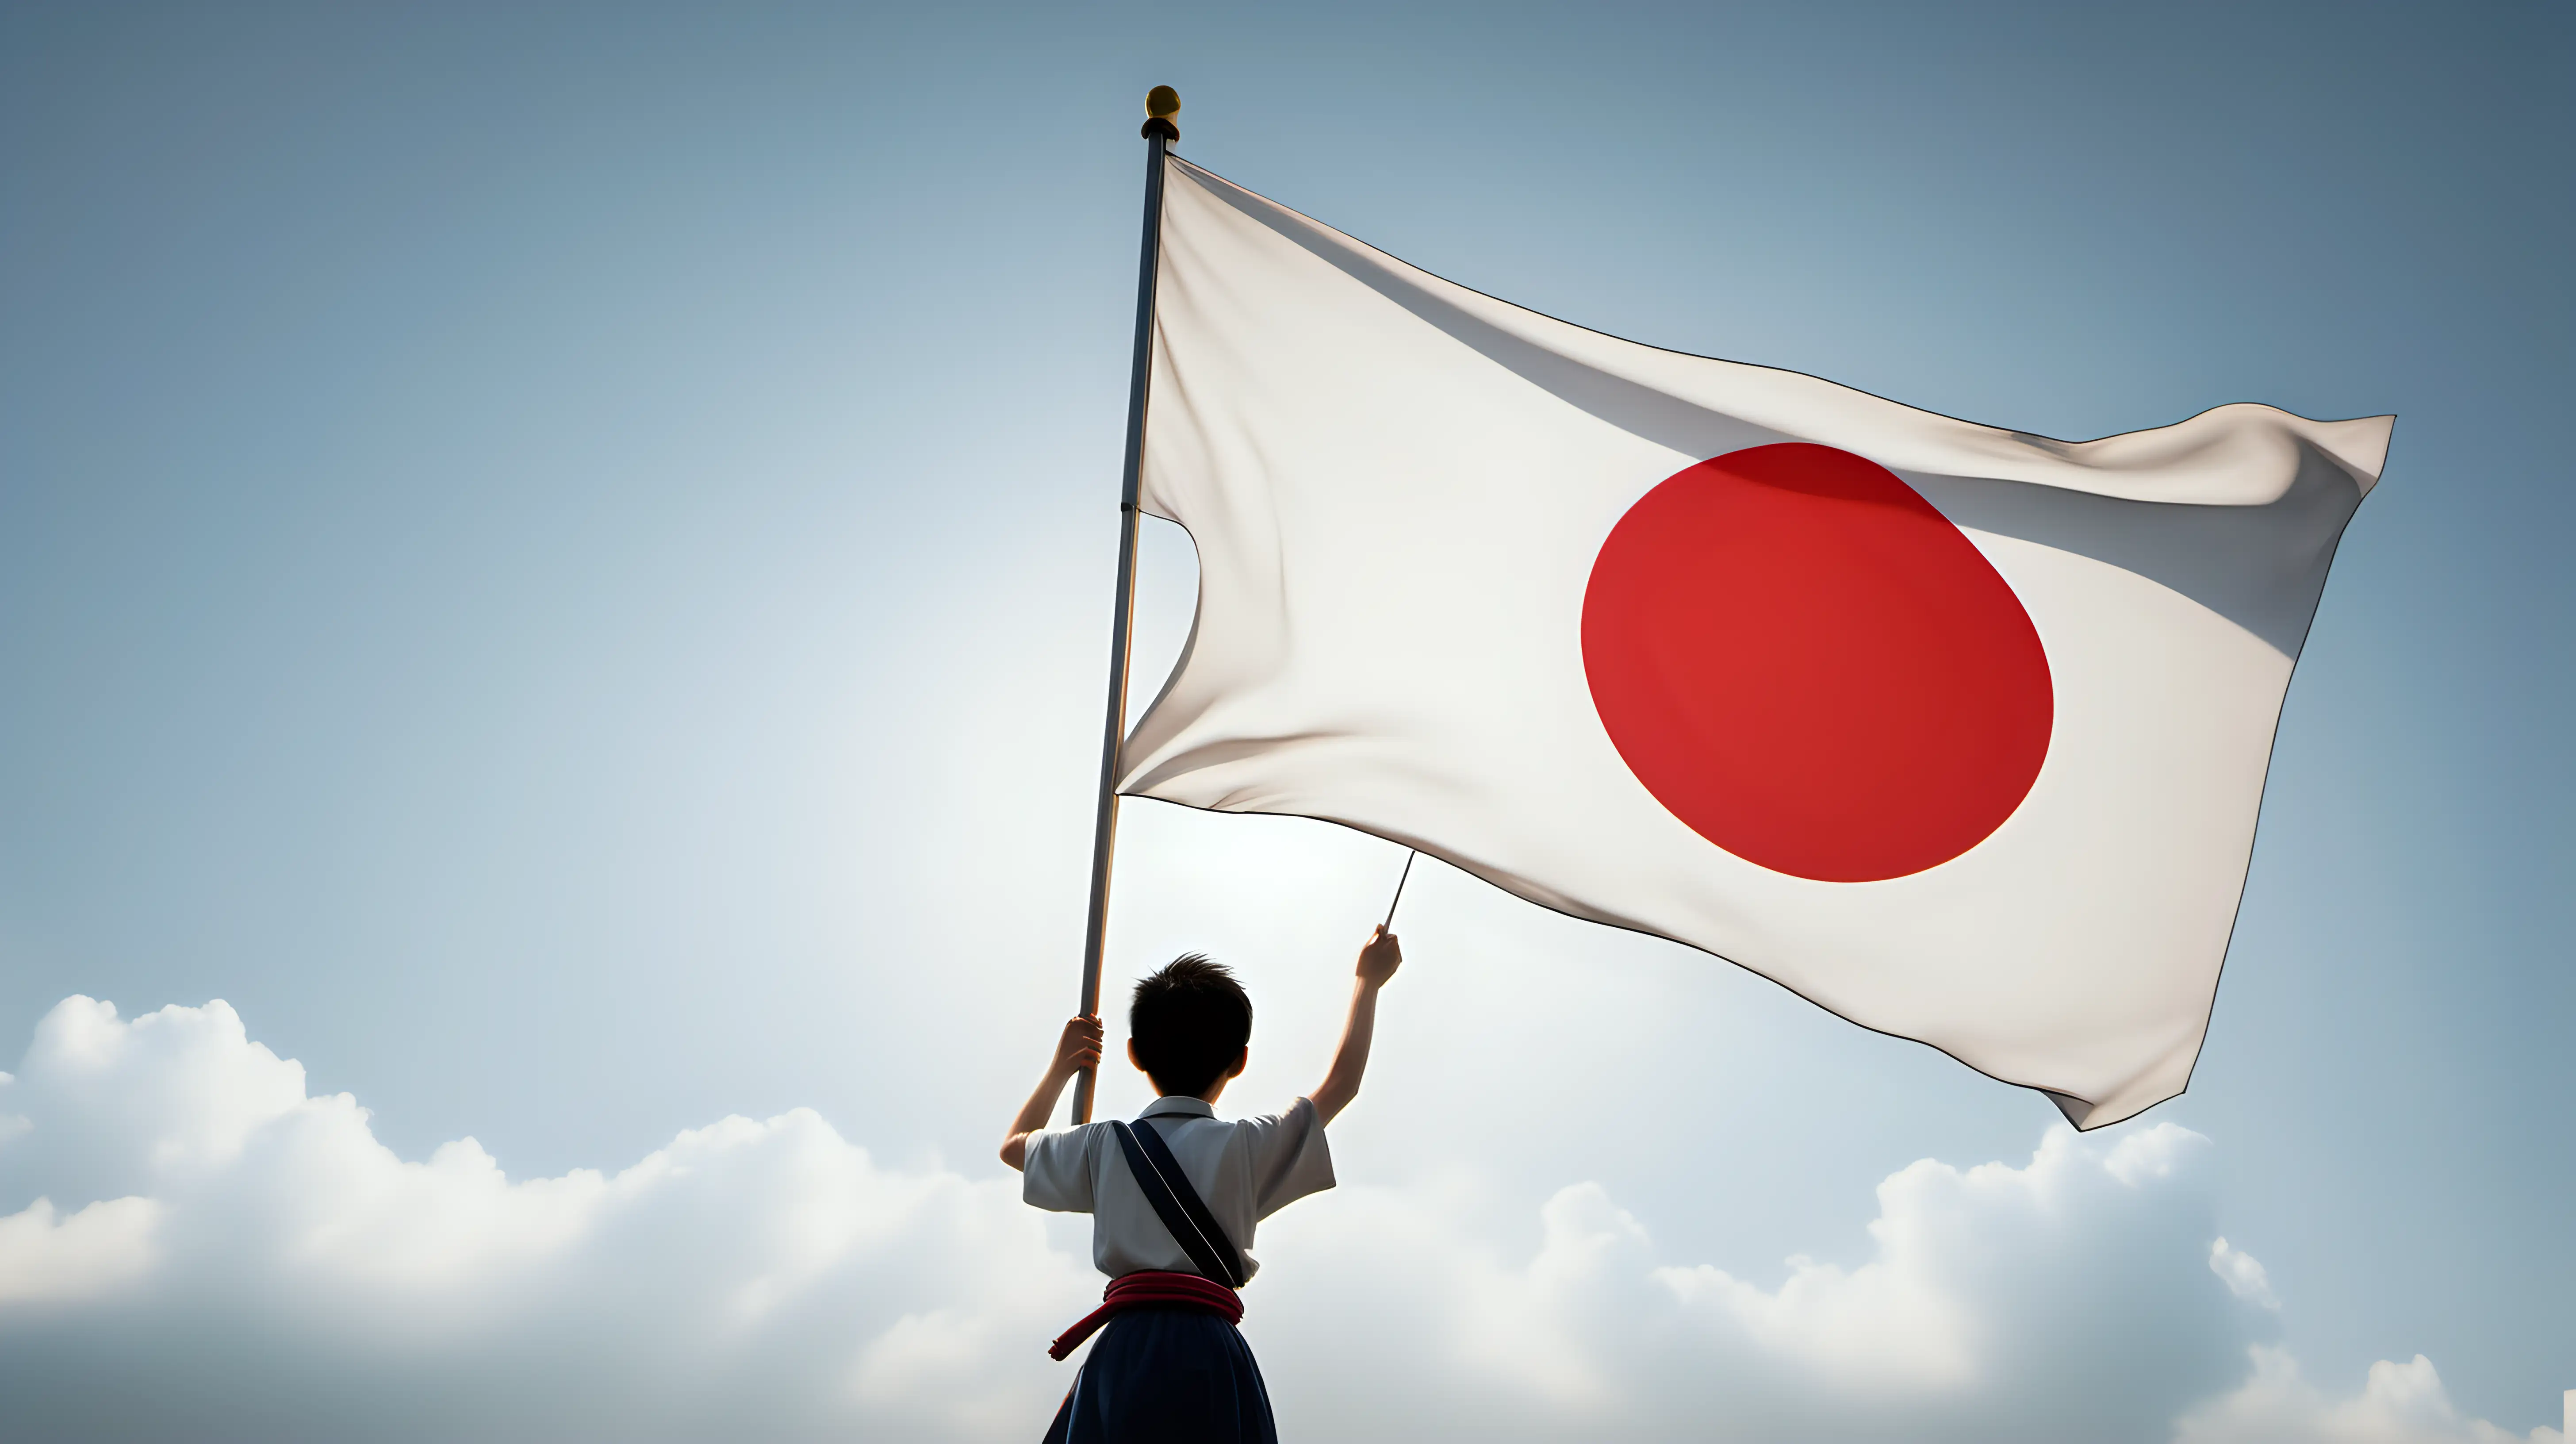 Enthusiastic Person Raising Japanese Flag Symbol of Patriotism and Homeland Pride